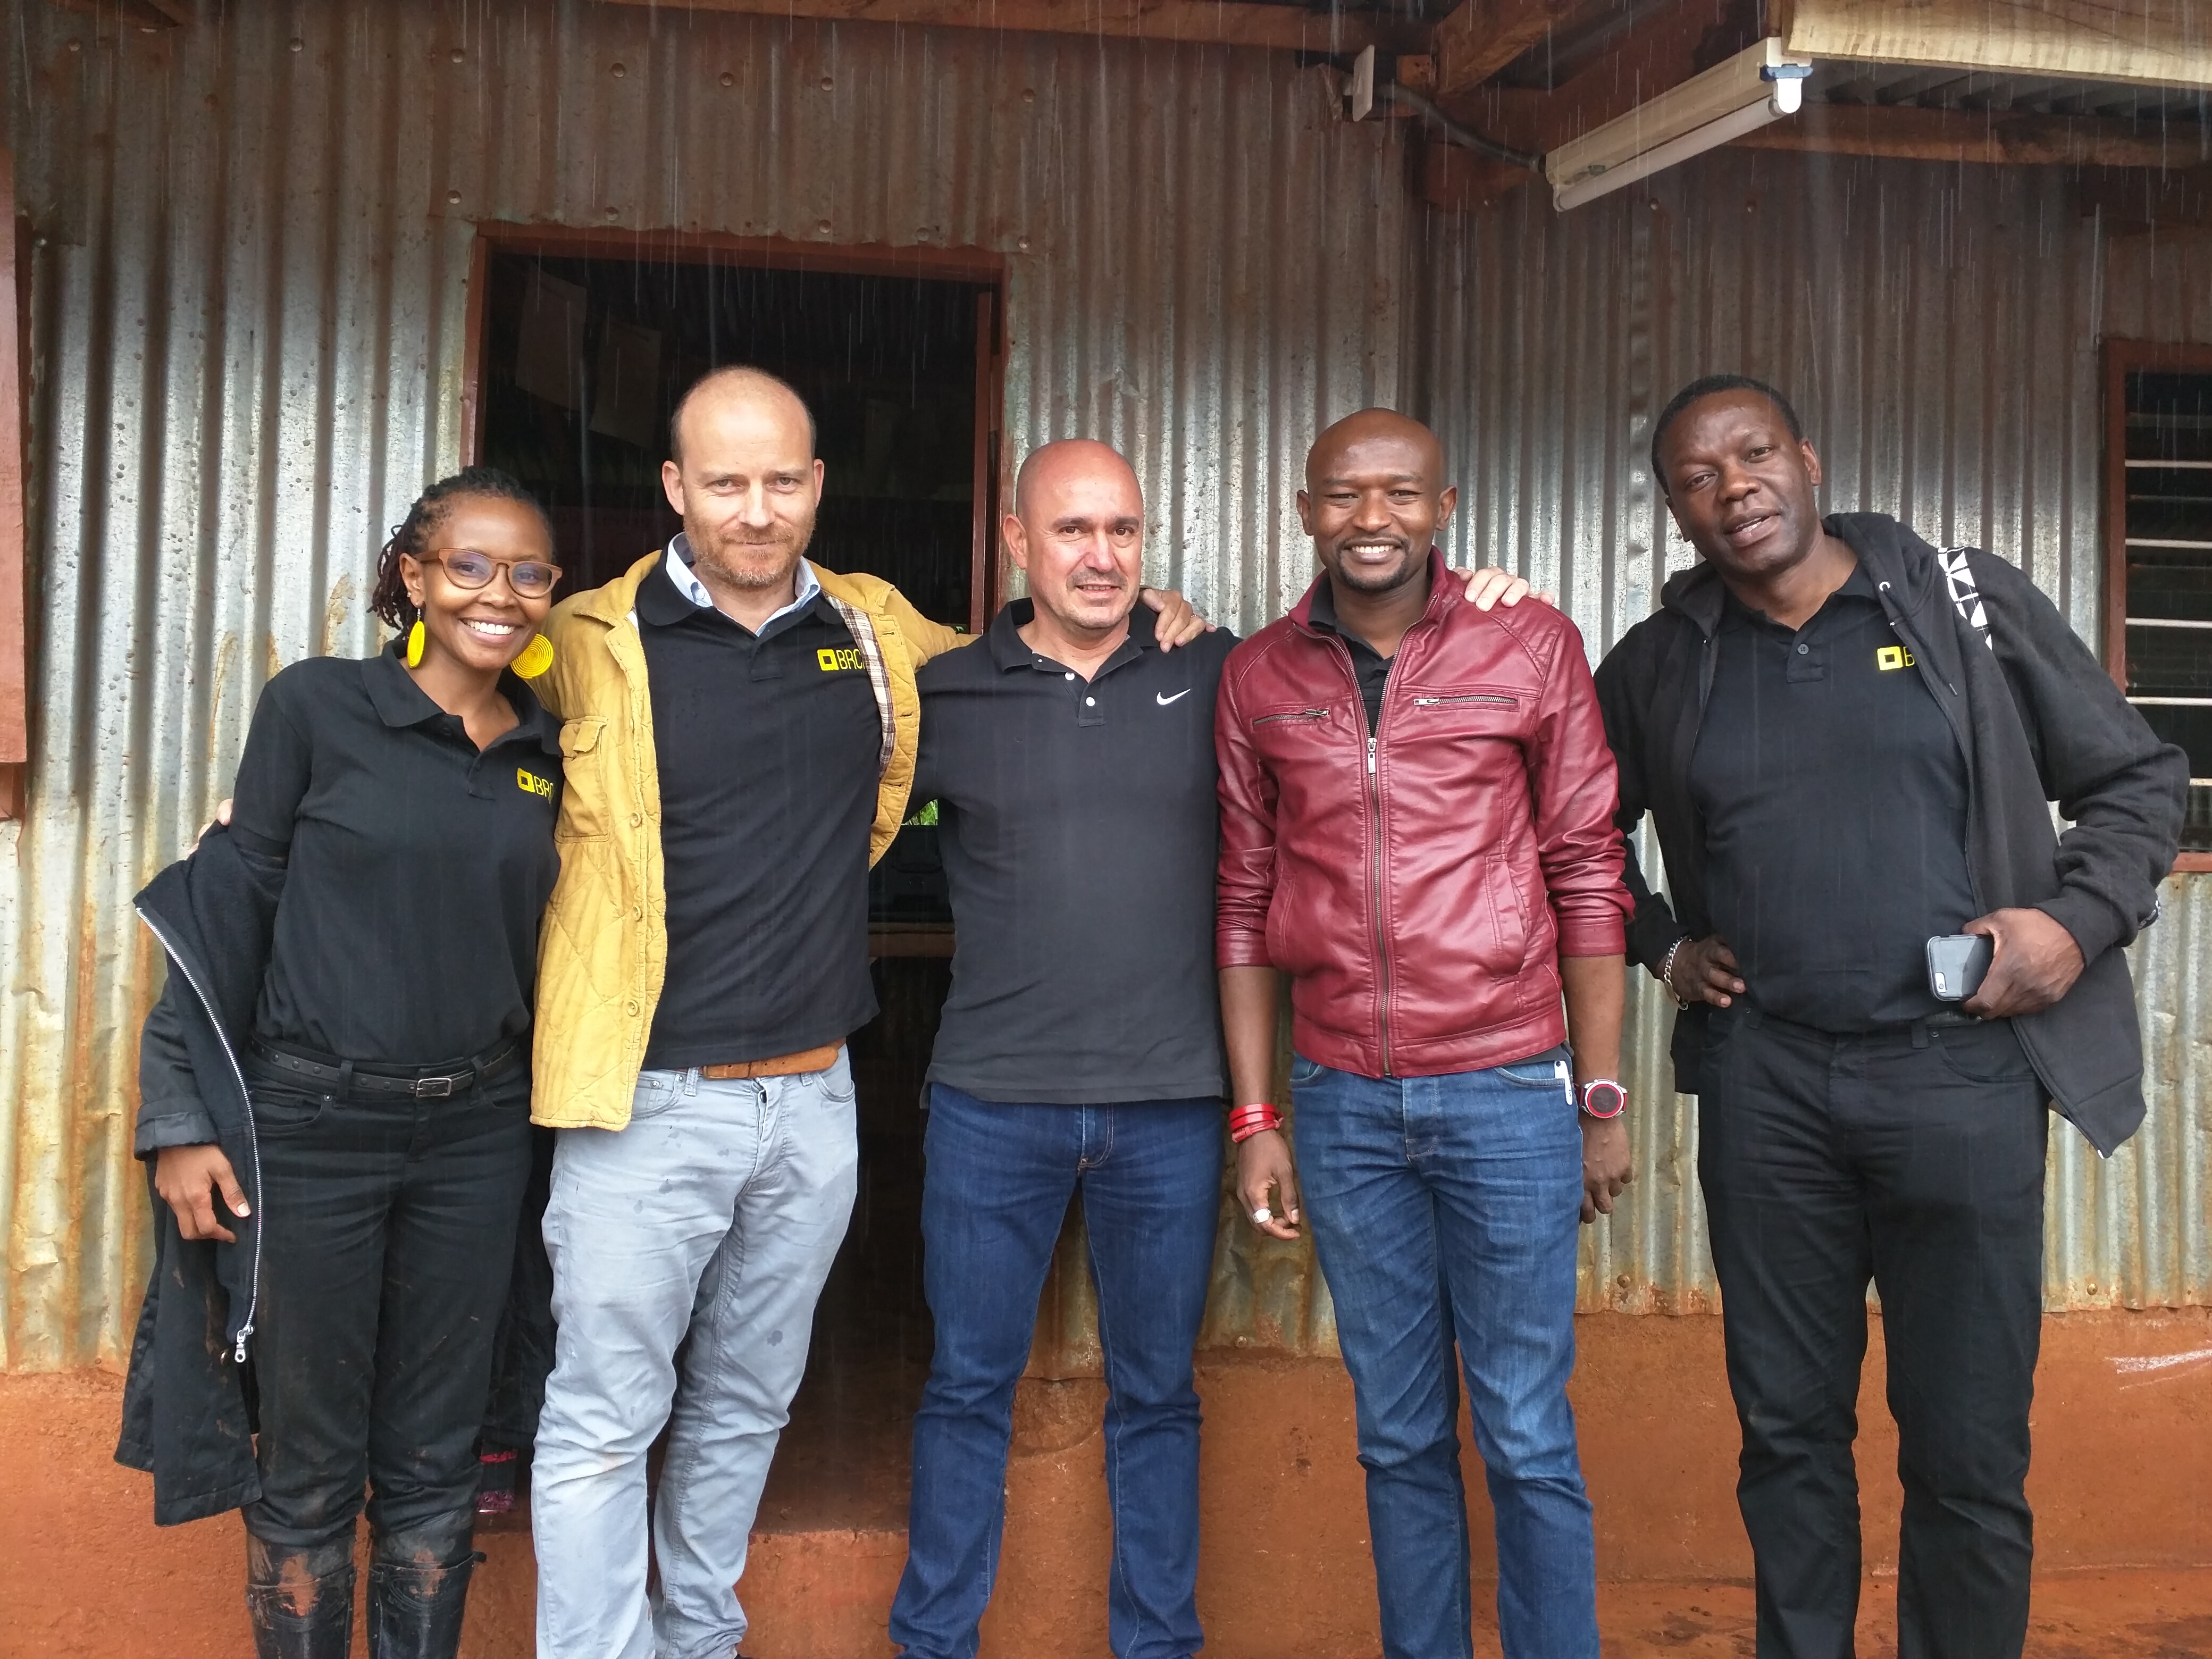 L to R: Juliana Rotich, Jamie Drummond, Keith Stewart, Mark Kamau, and Mwambu Wanendeya